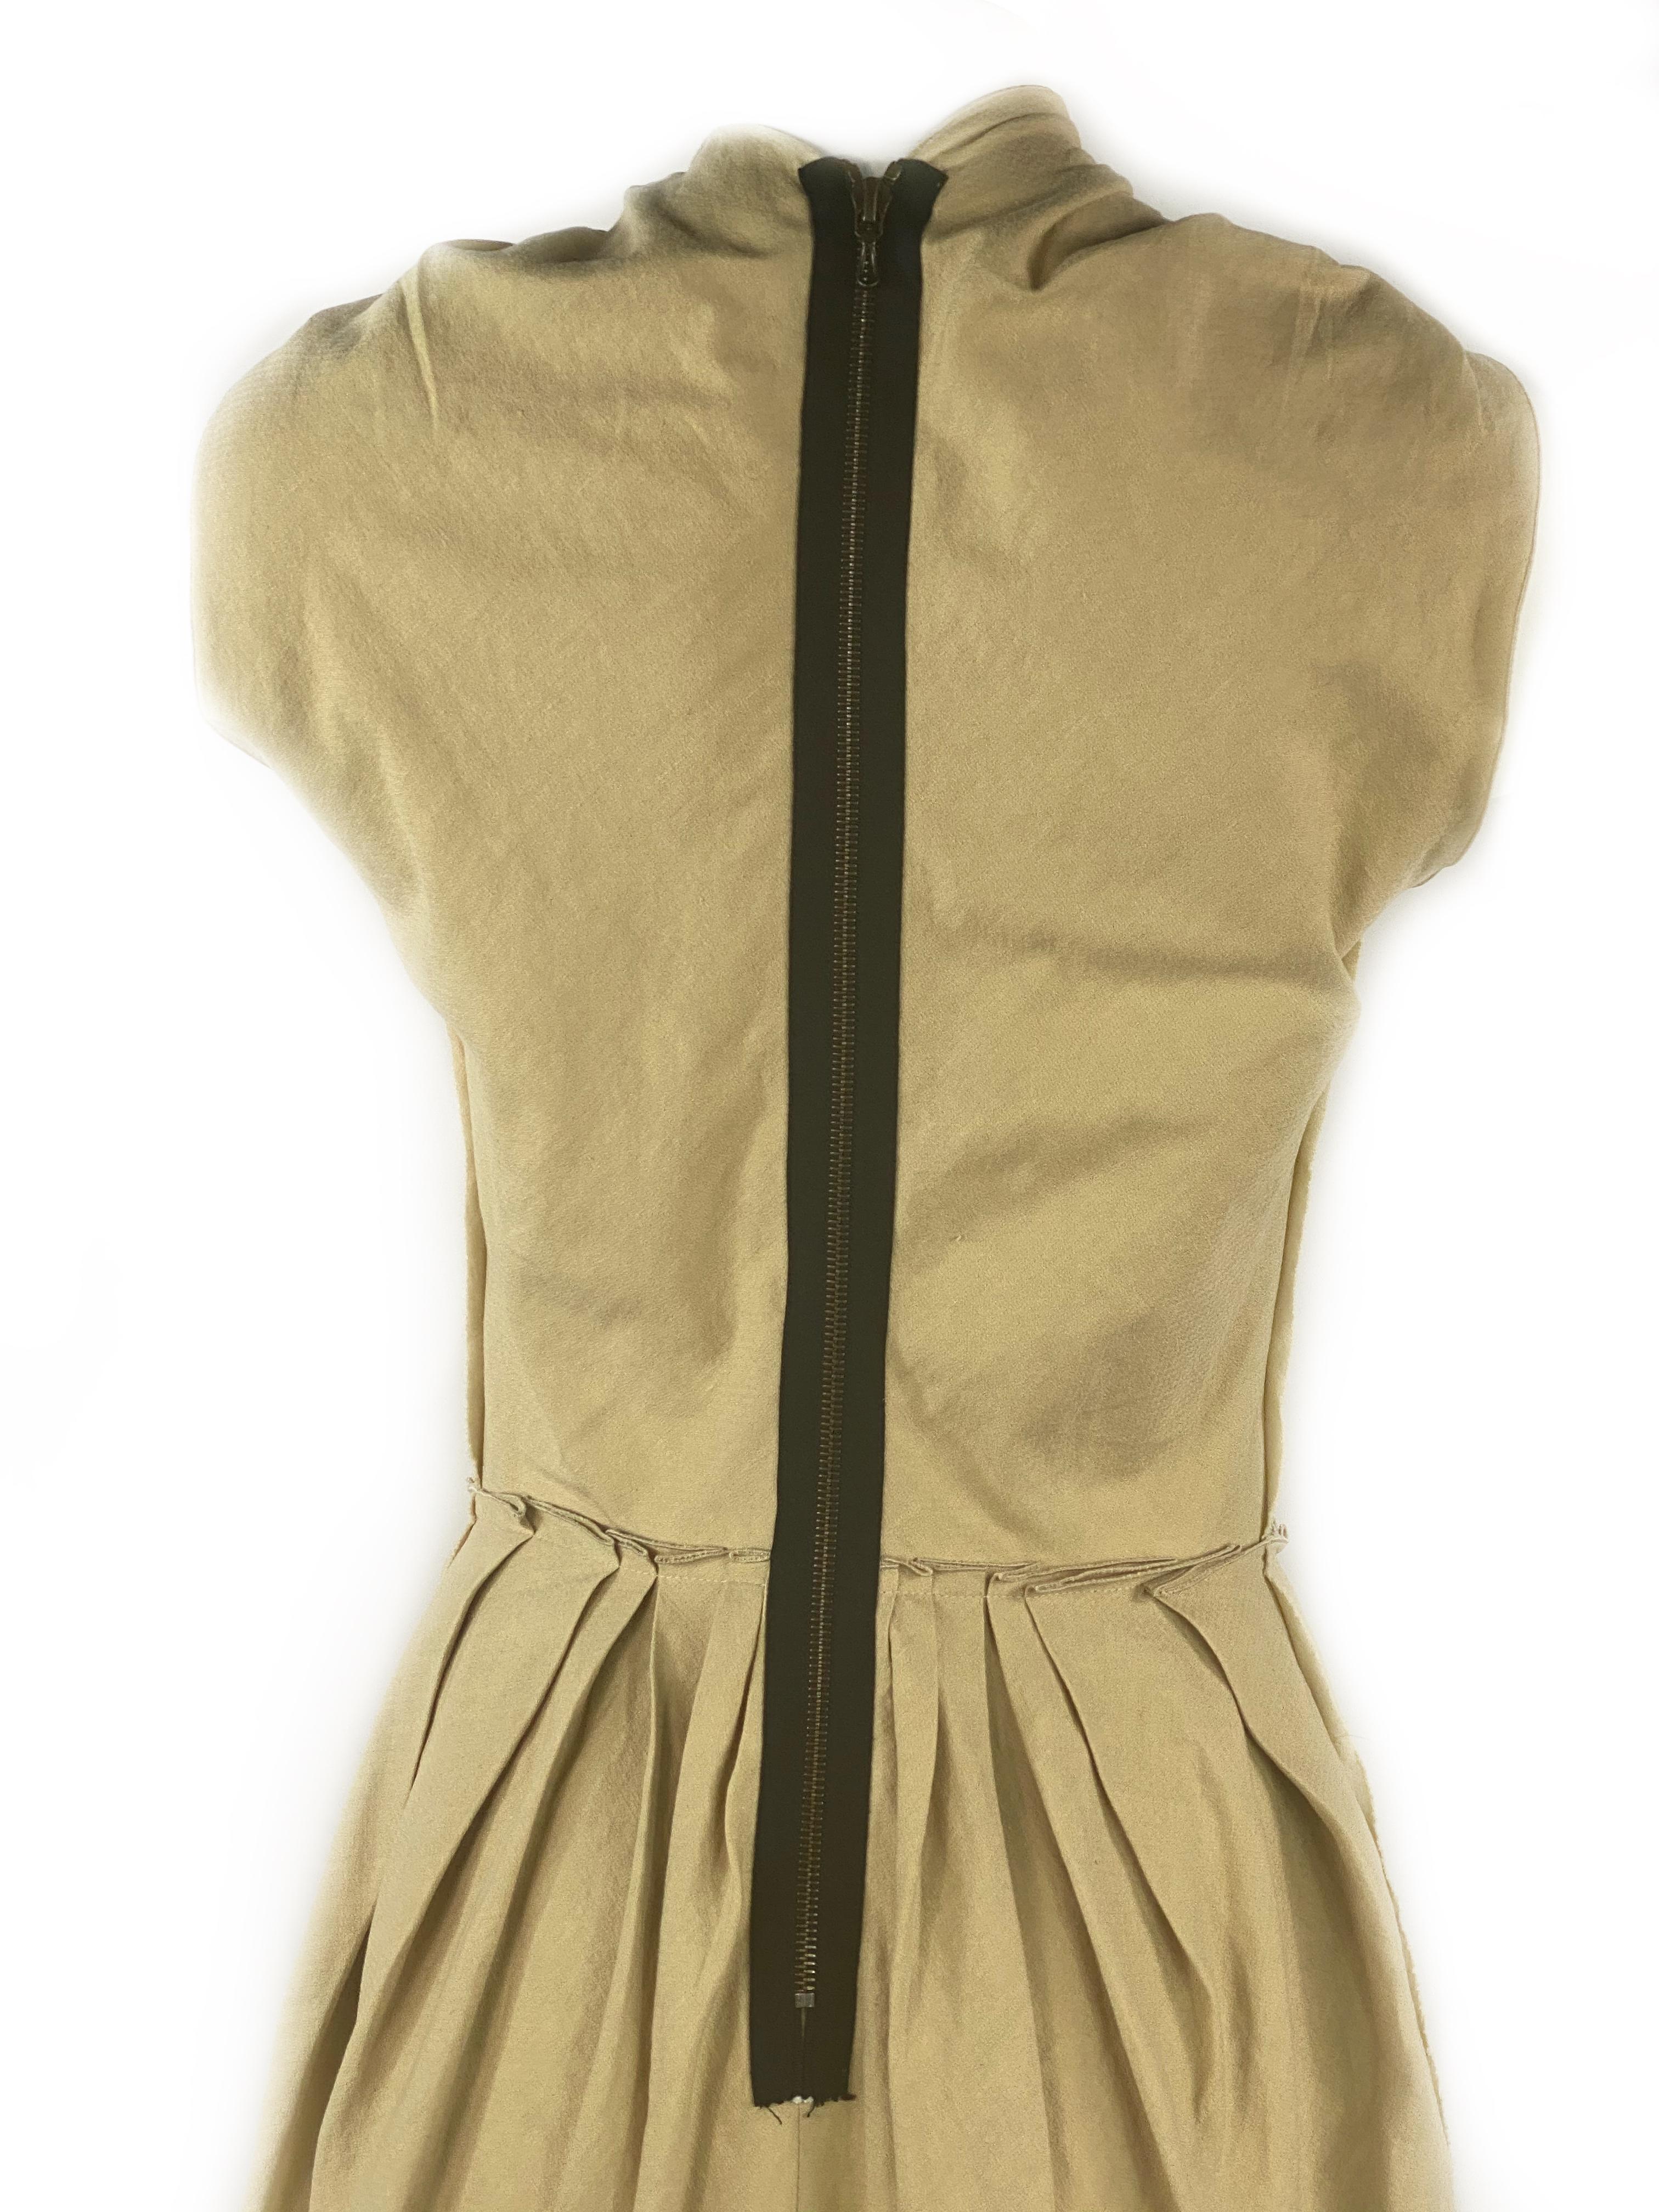 LANVIN Est. 2009 Beige Sleeveless Mini dress w/ Zipper Size 36 2